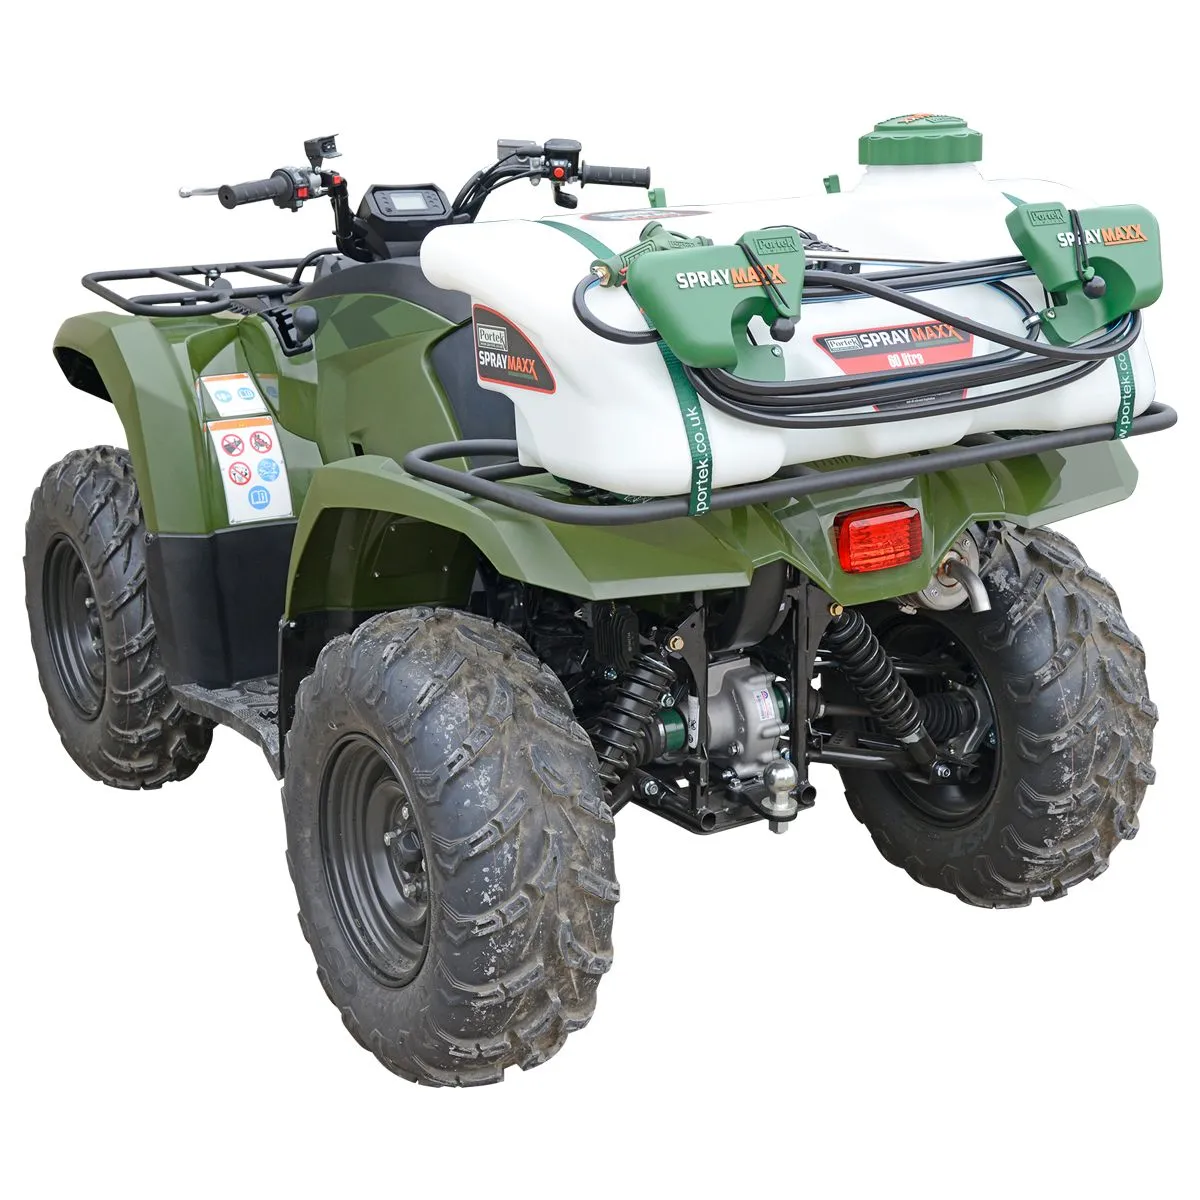 Portek Spraymaxx Pro Series Quad ATV Spot Sprayer 90L (15L/min Pump)